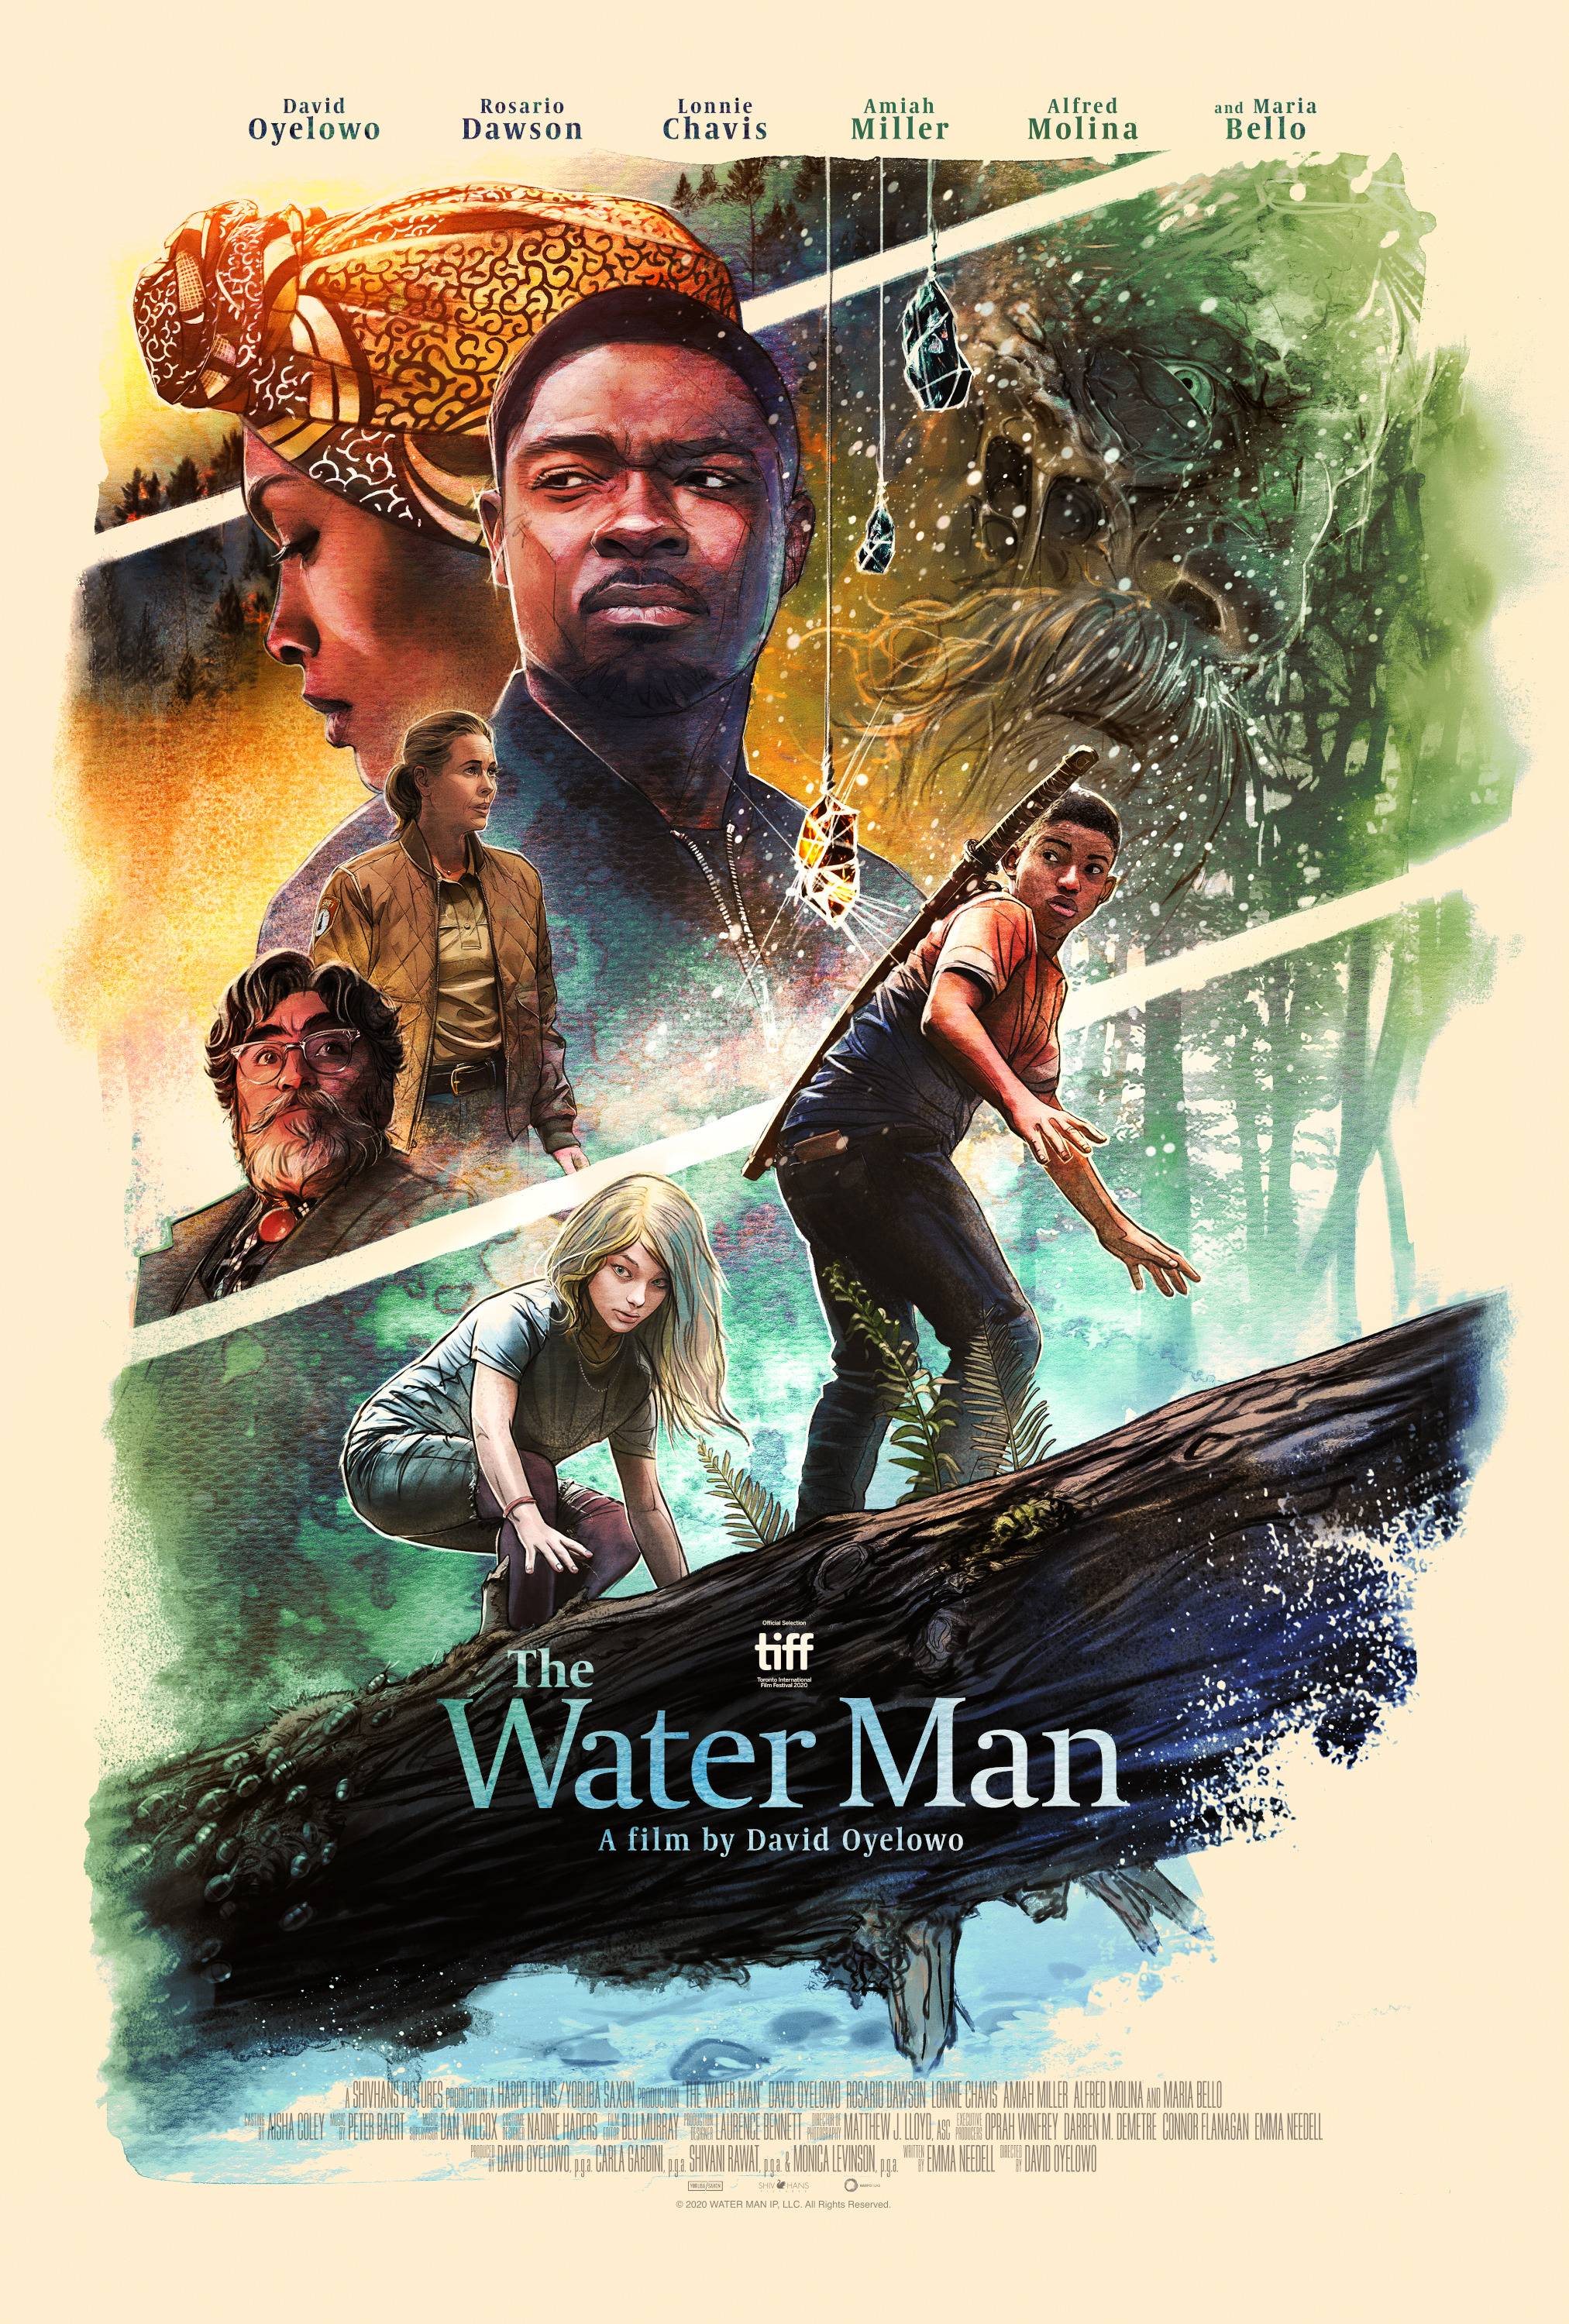 Stiahni si Filmy CZ/SK dabing The Water Man (2020)(CZ)[WebRip][1080p] = CSFD 36%